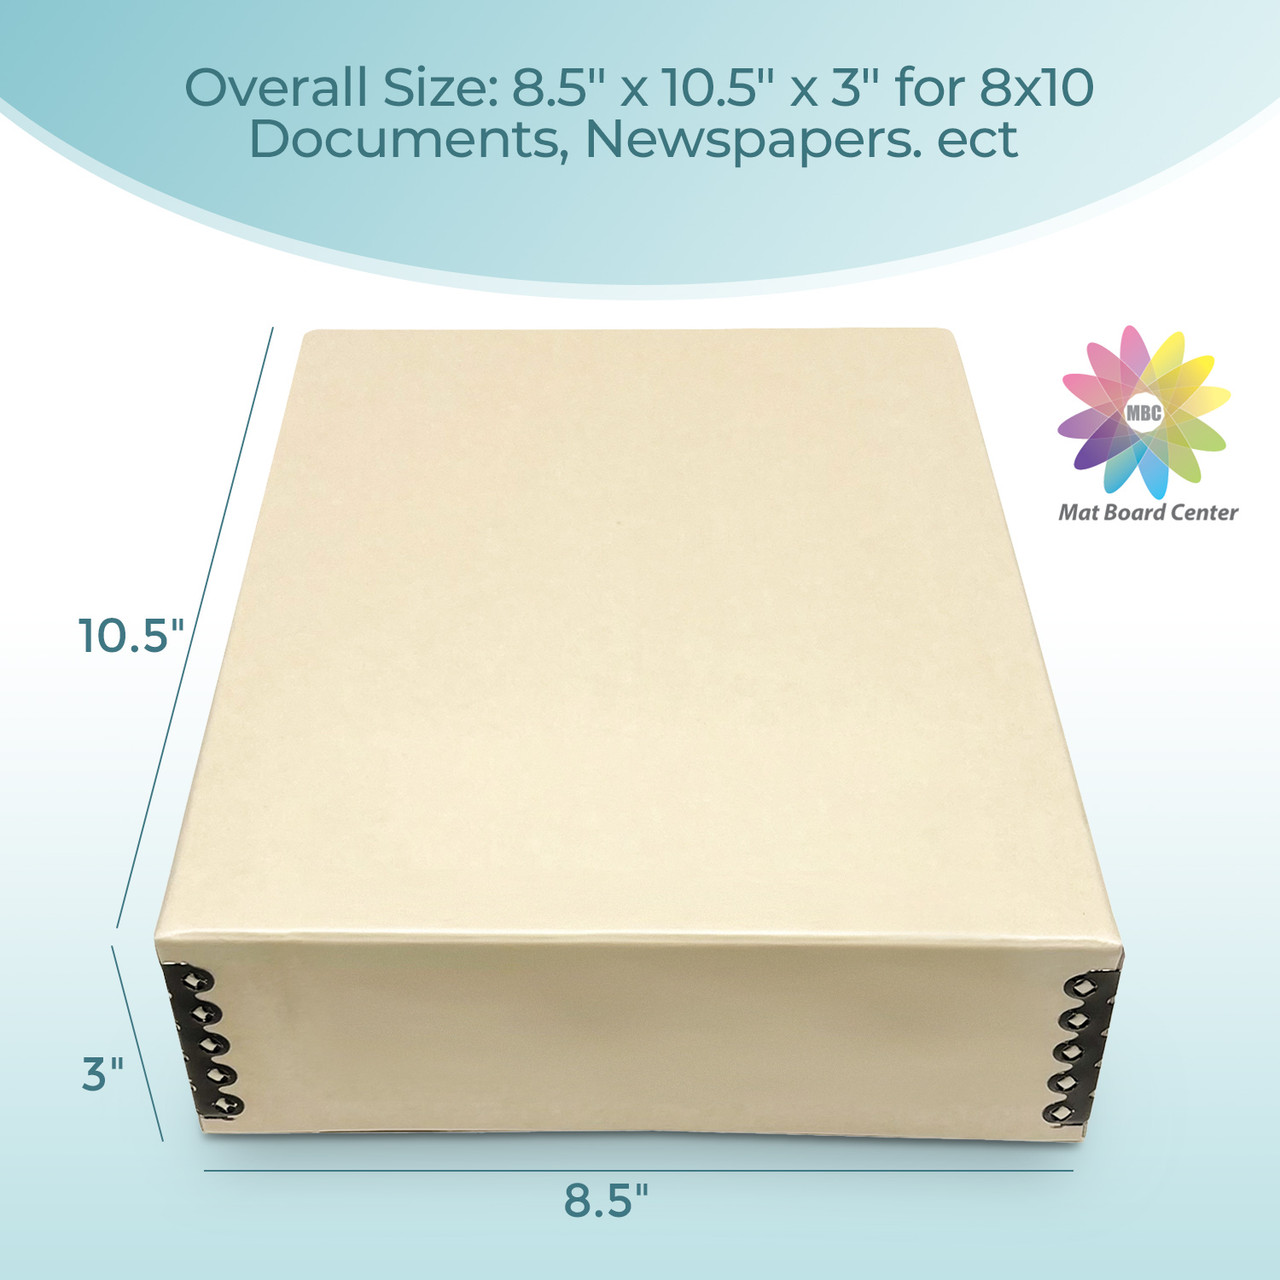 Lineco 8x10 Archival Print Storage Box, Drop Front Design, 3 Deep, Tan